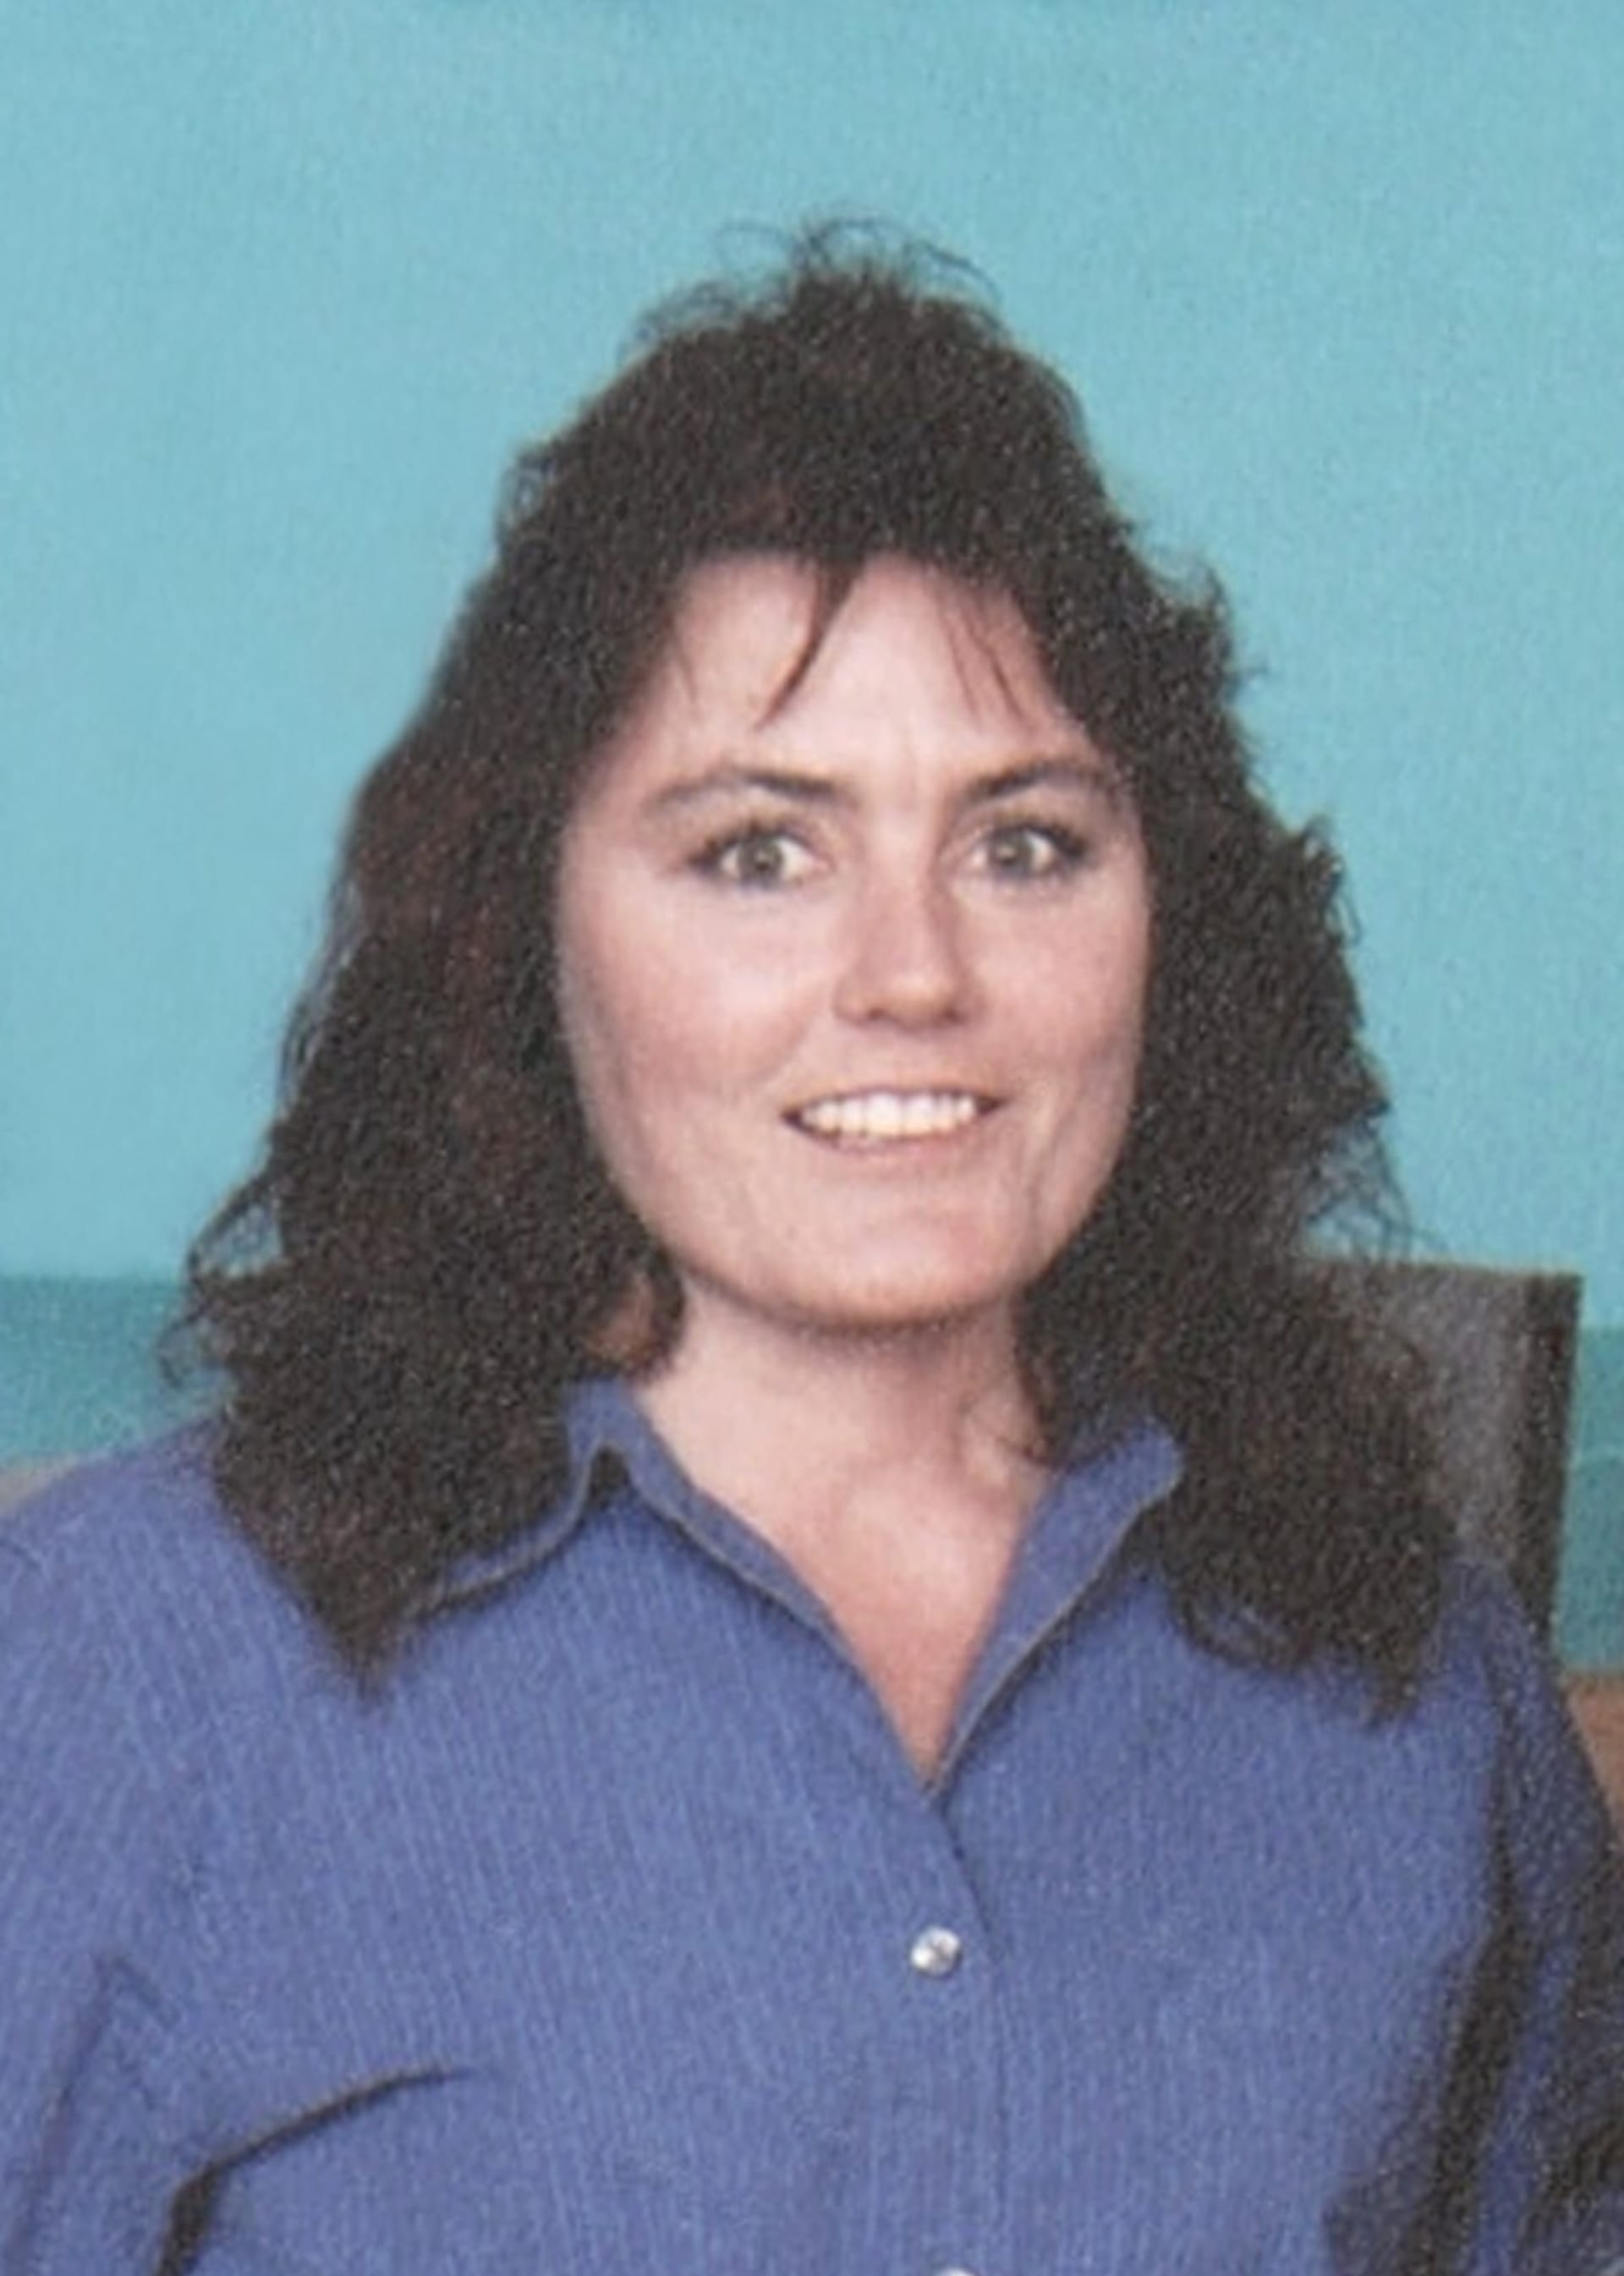 Takto vypadala Connie Culpová před útokem manžela v roce 2004